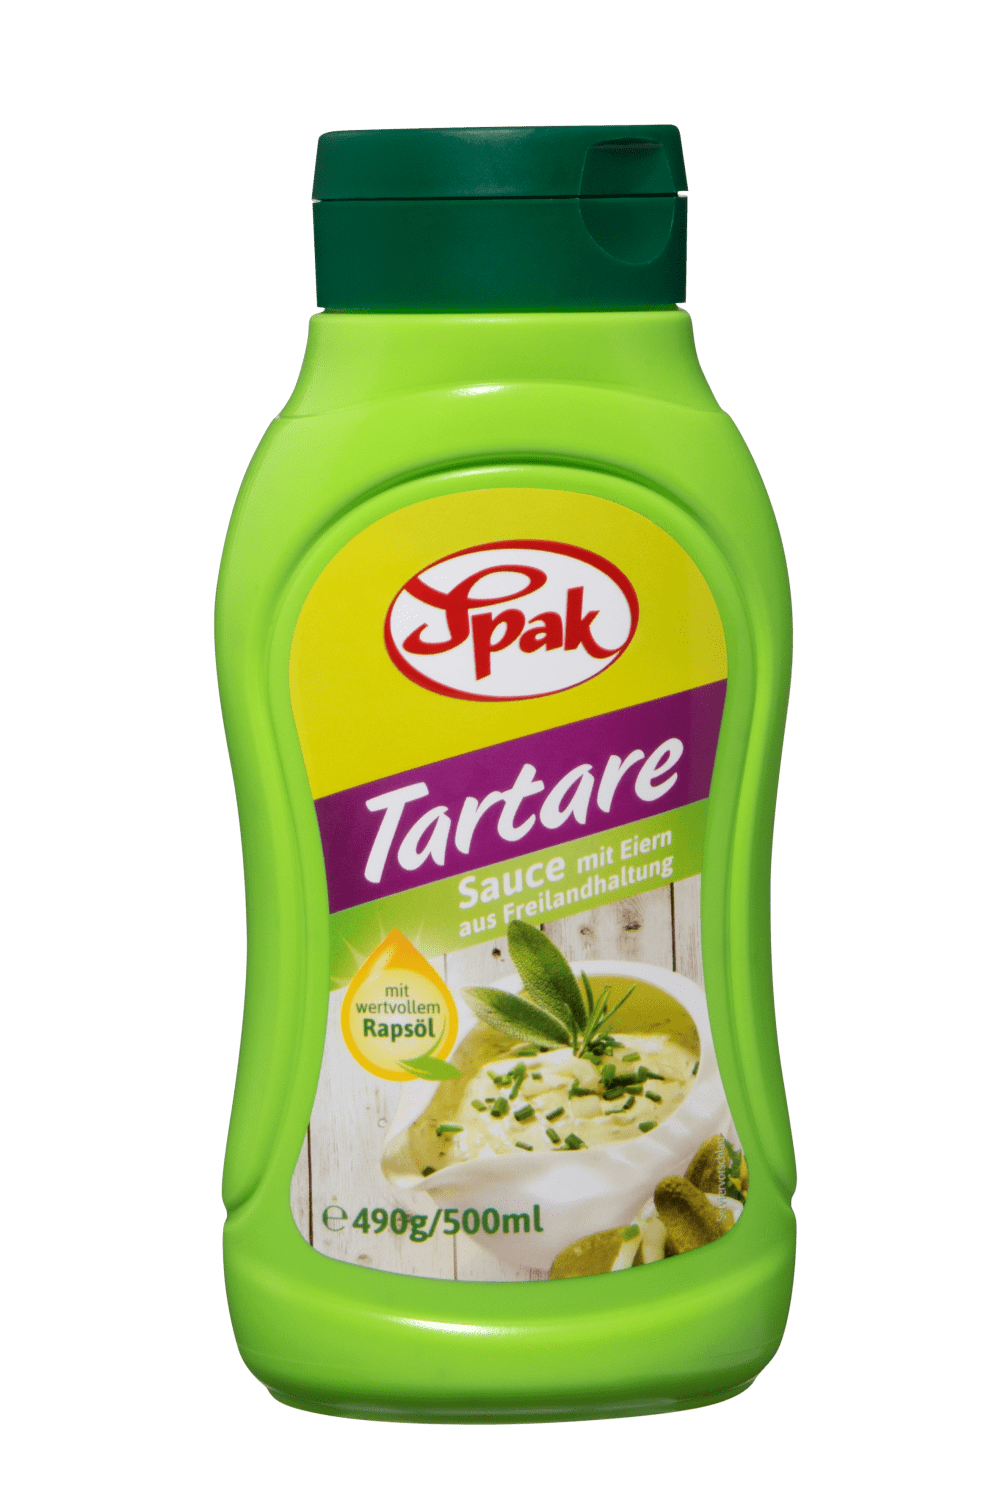 spak-sauce-tartare-with-free-range-eggs-500ml-spak